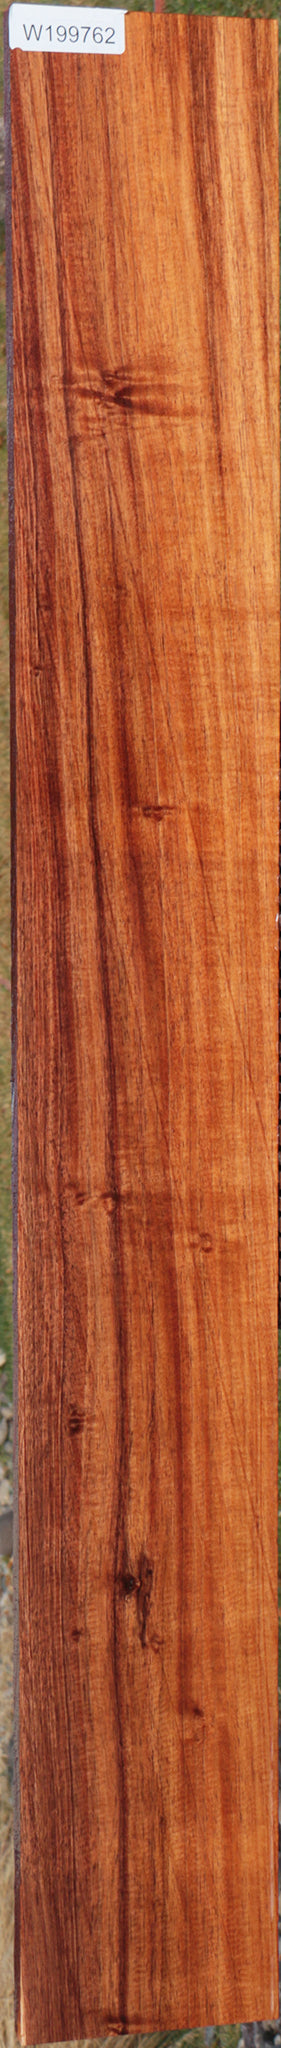 Quartersawn Hawaiian Koa Lumber